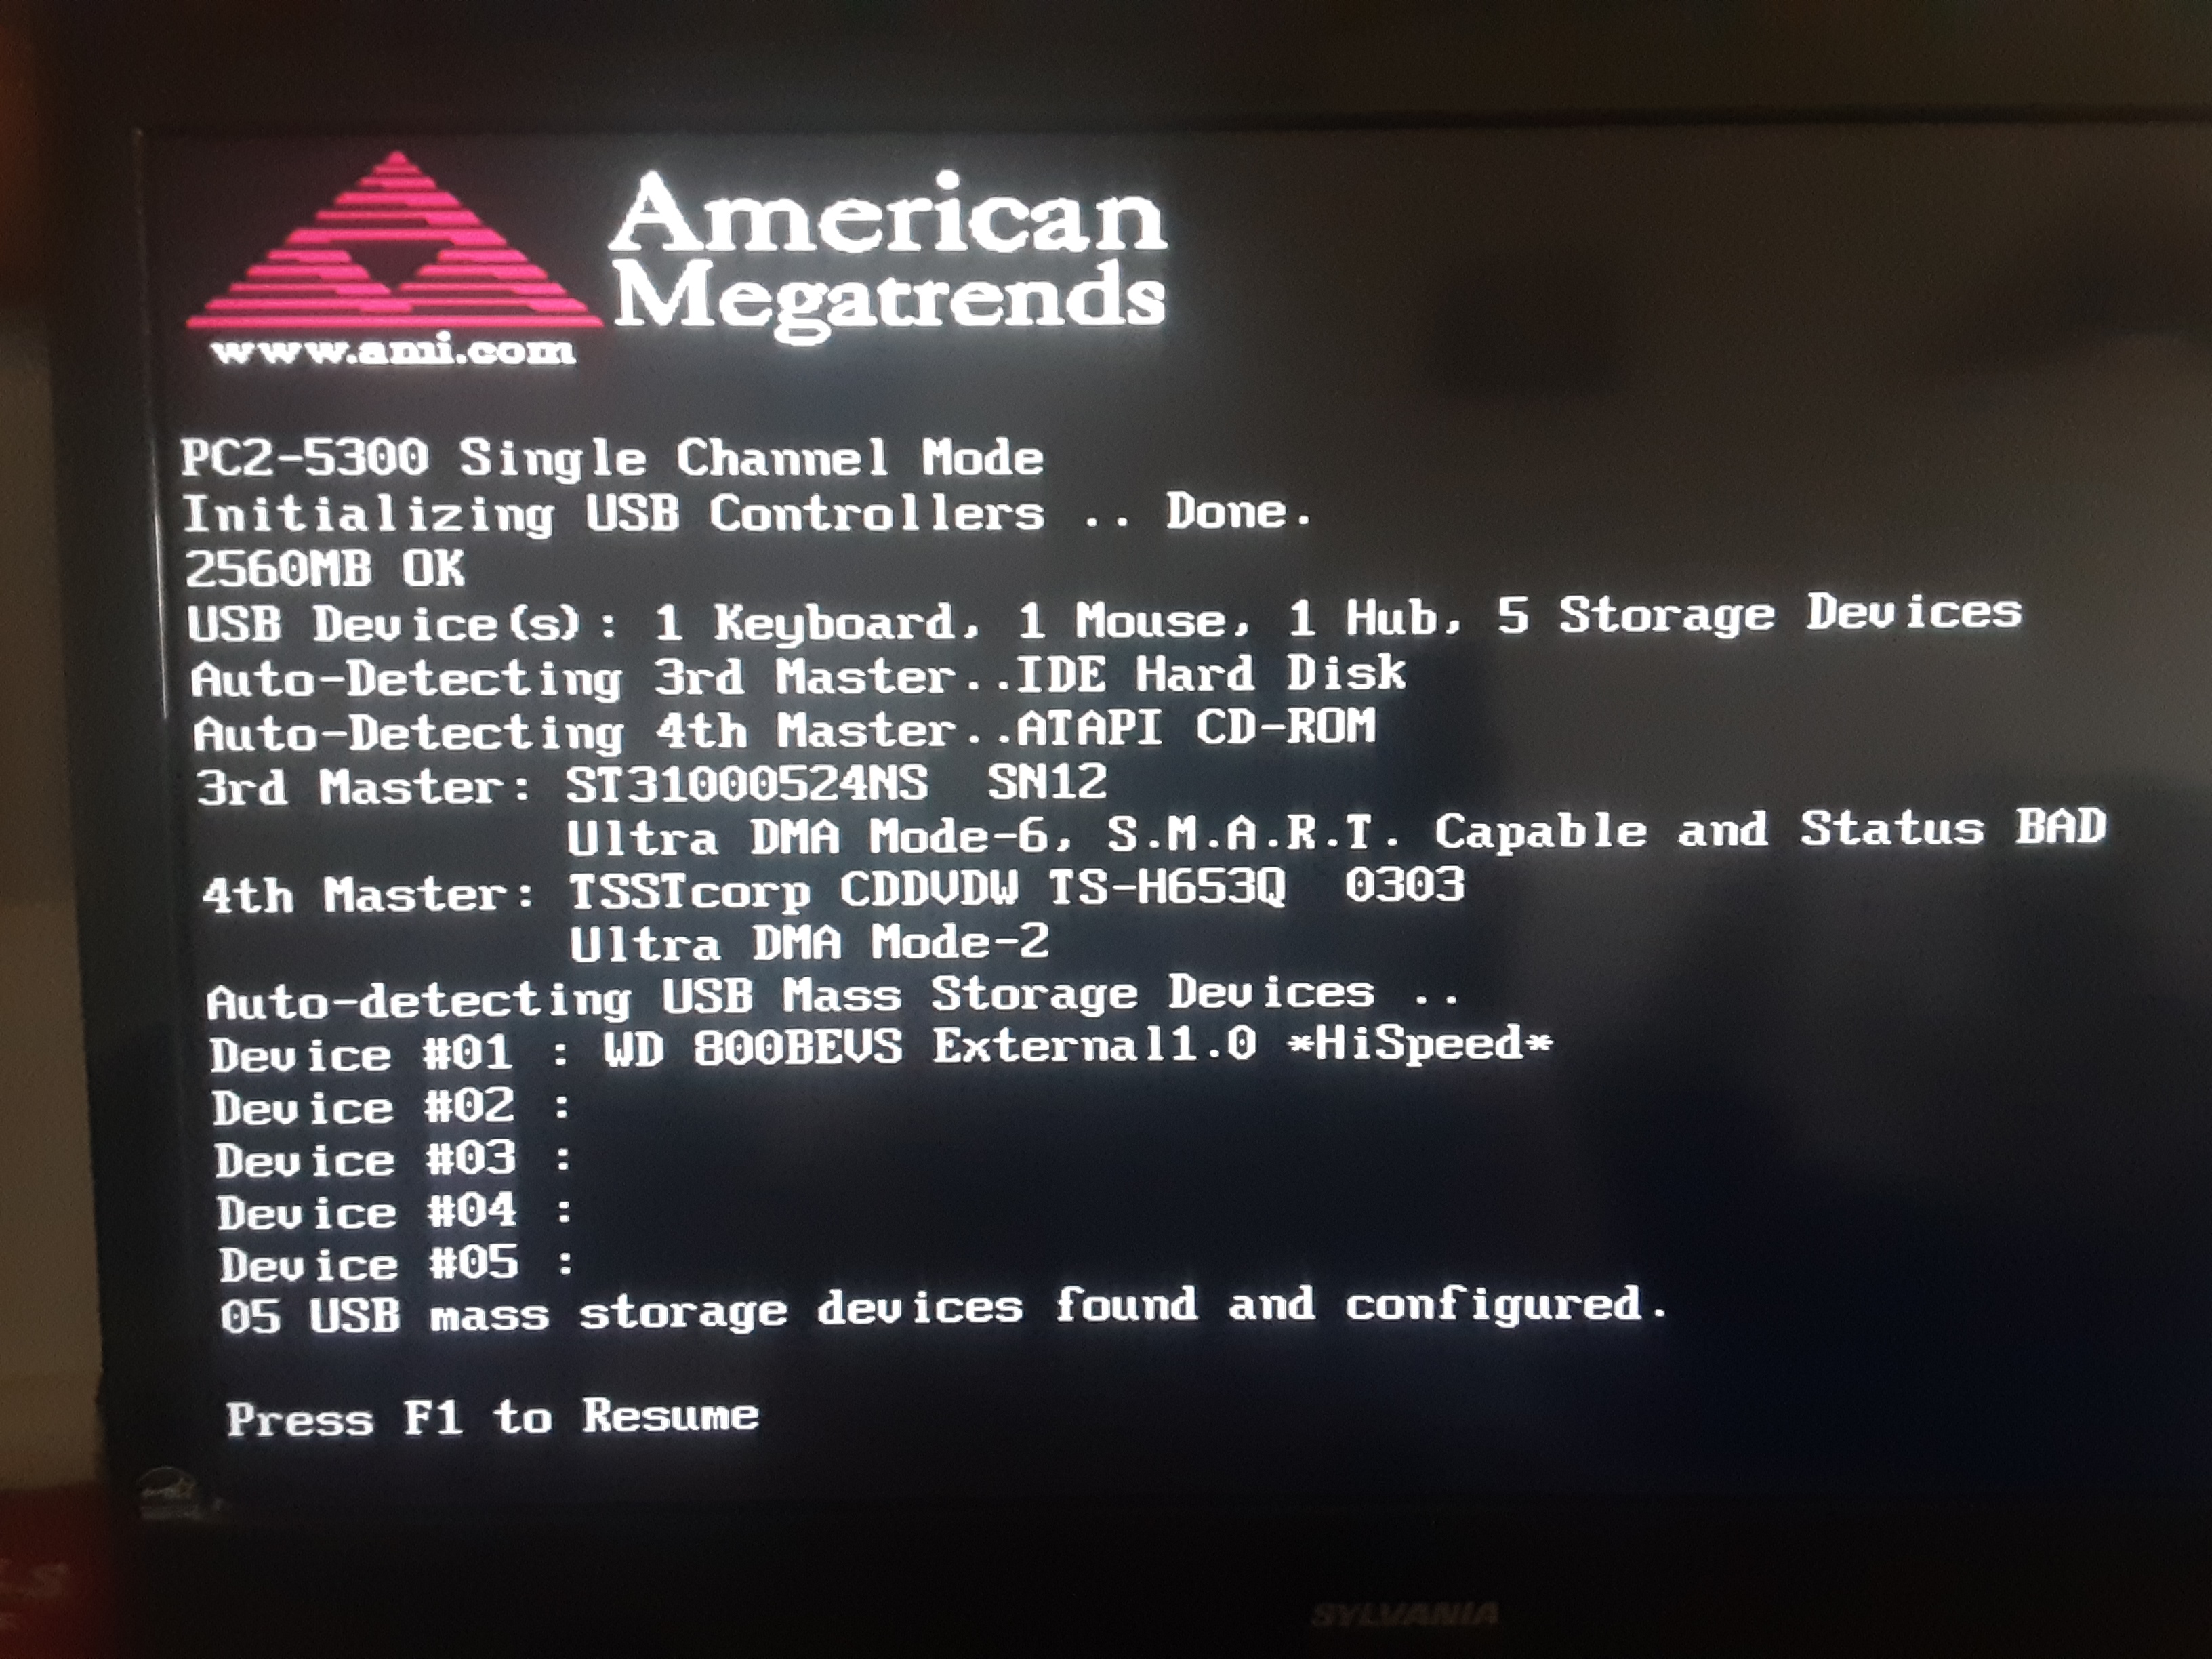 Press F1 to Run SETUP won't work on American Megatrends screen : r